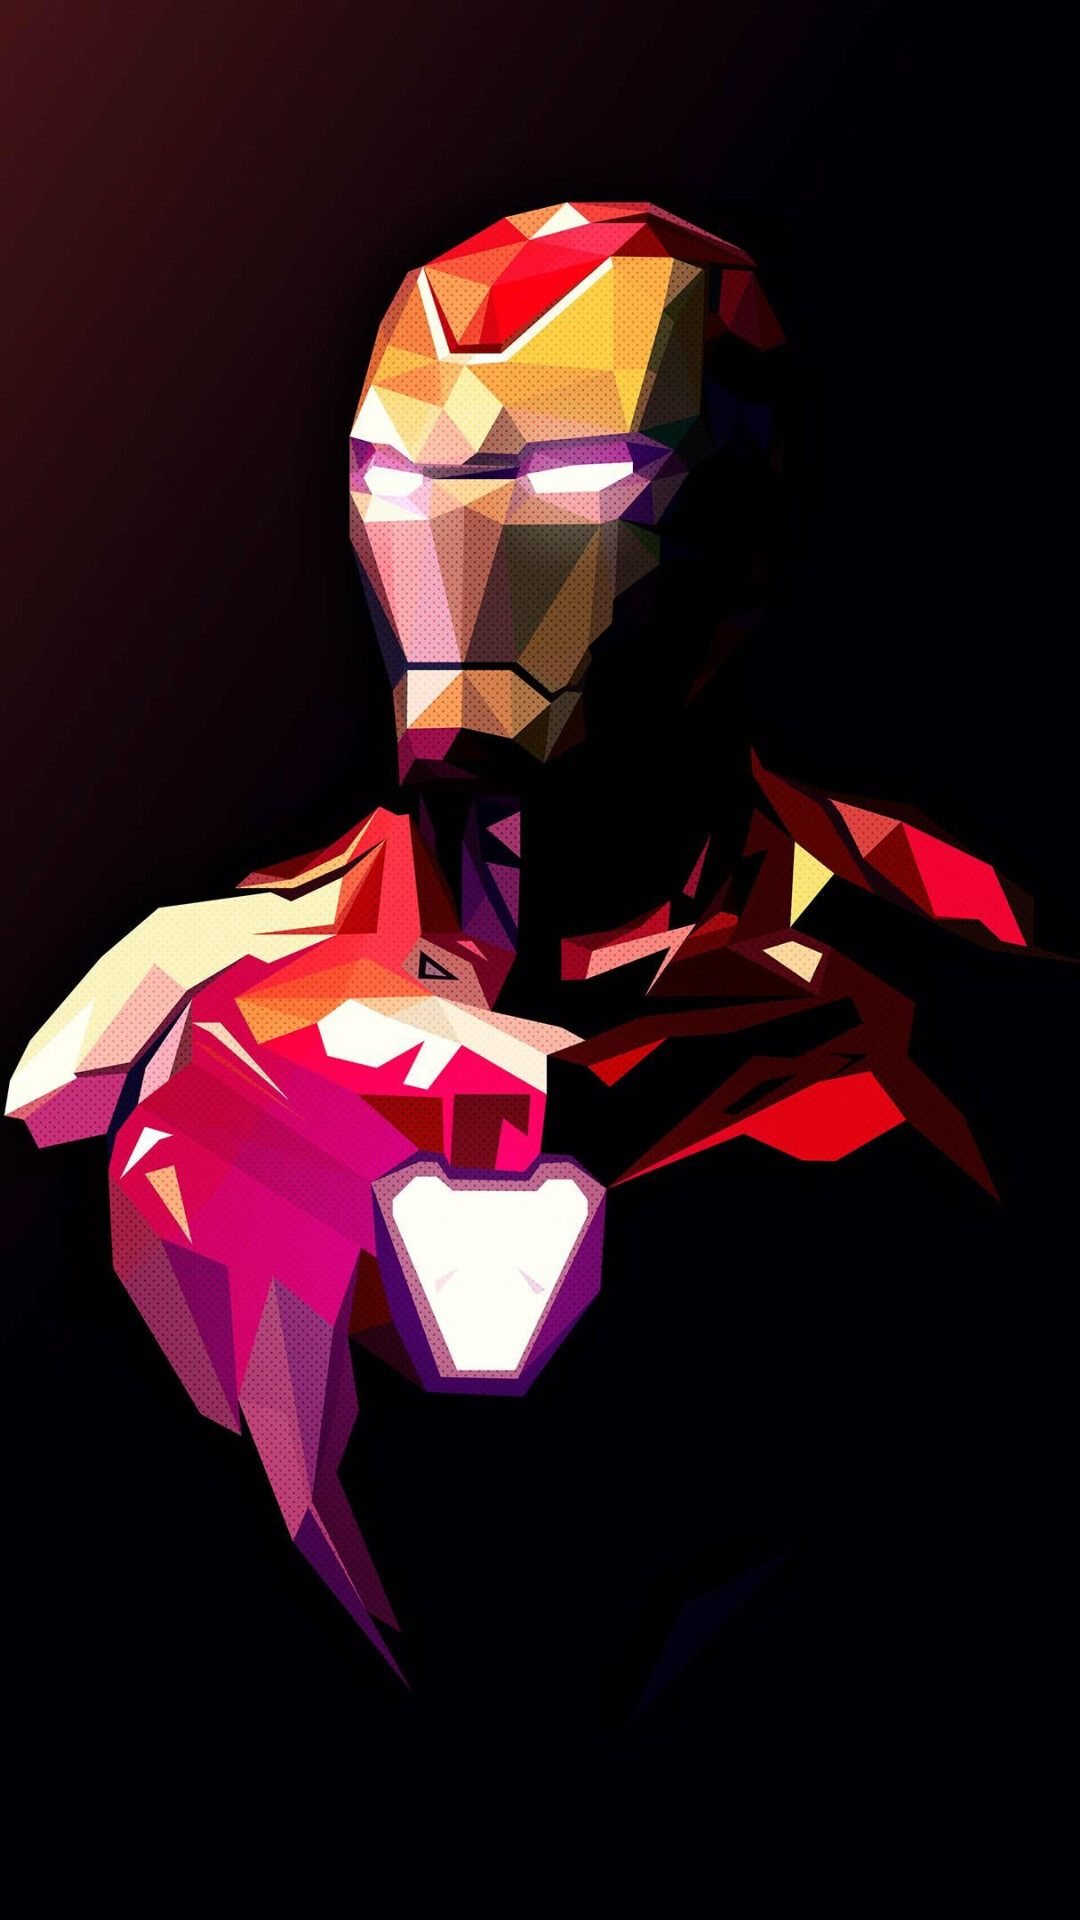 Avengers: Iron Man, A superhero appearing in American comic books. 1080x1920 Full HD Wallpaper.